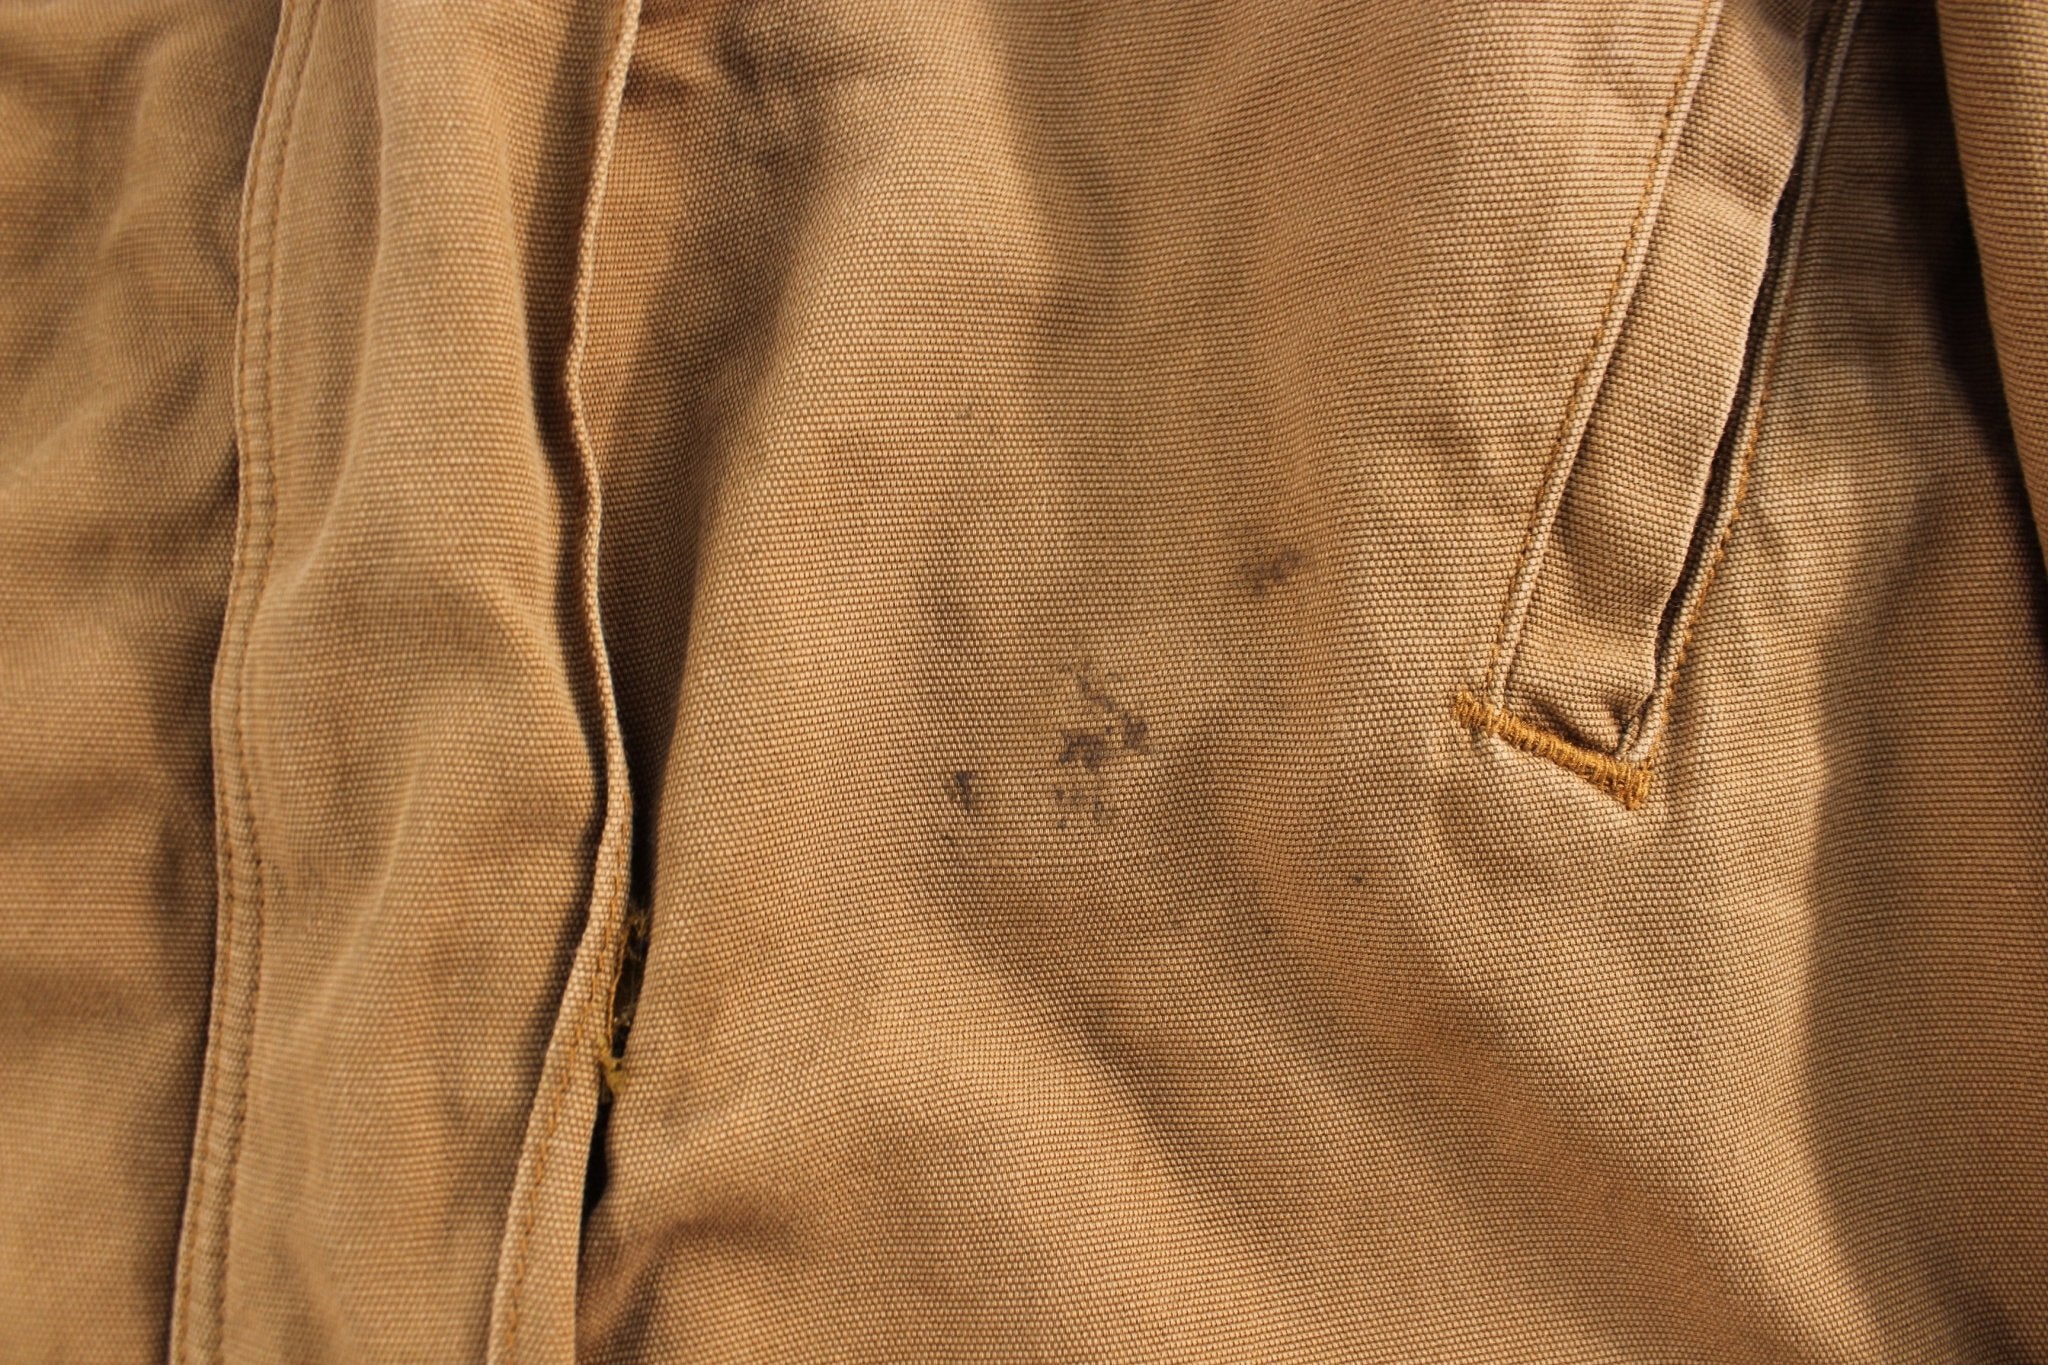 Carhartt Logo Patch Tan Flame Resistant Hooded Zip Up Jacket - ThriftedThreads.com